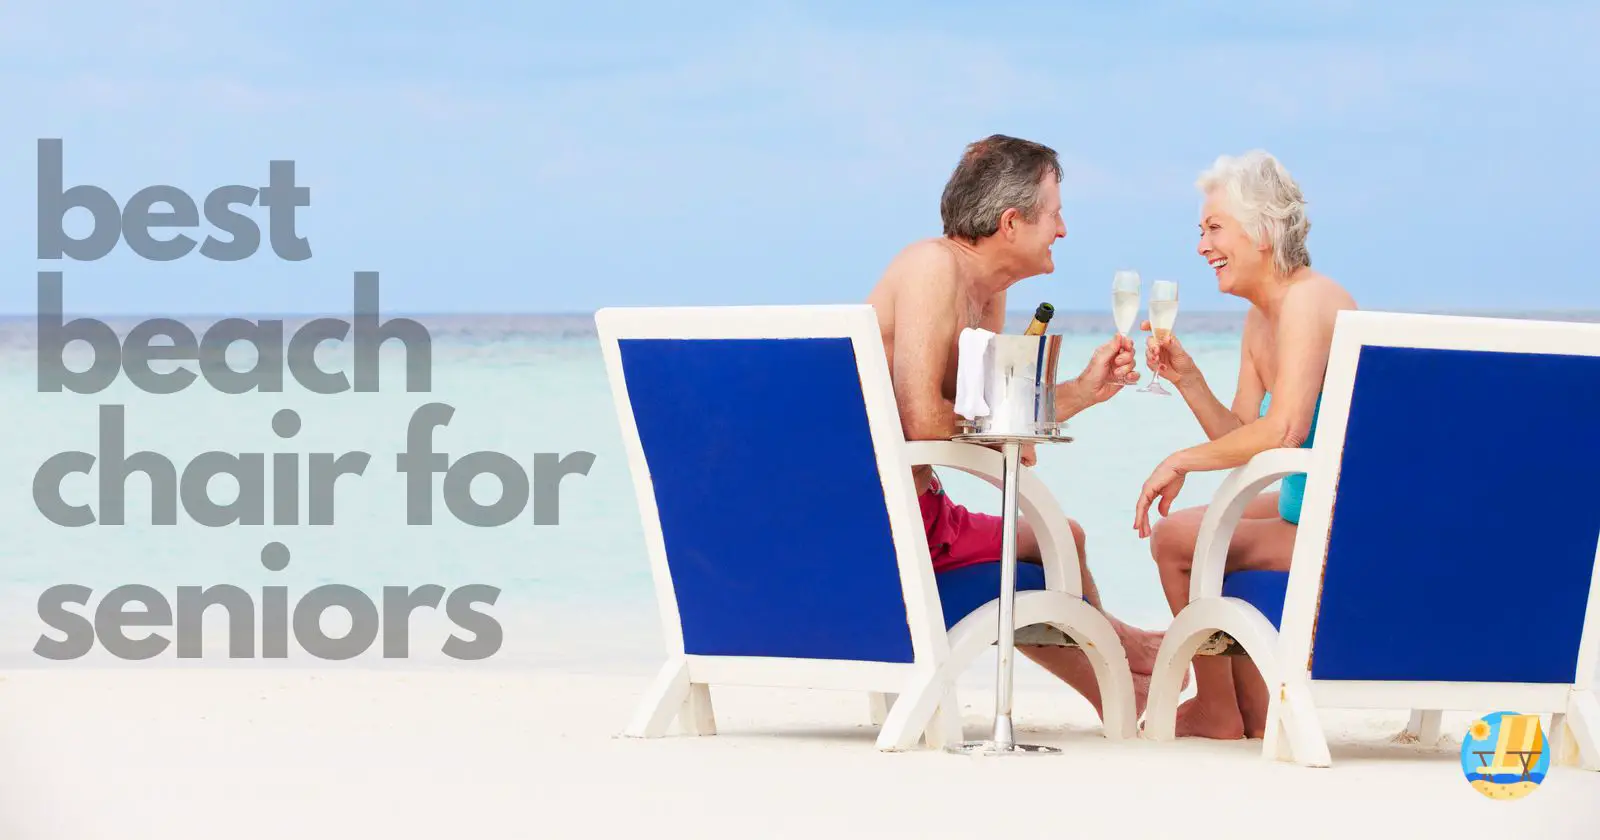 Best Beach Chairs for Seniors